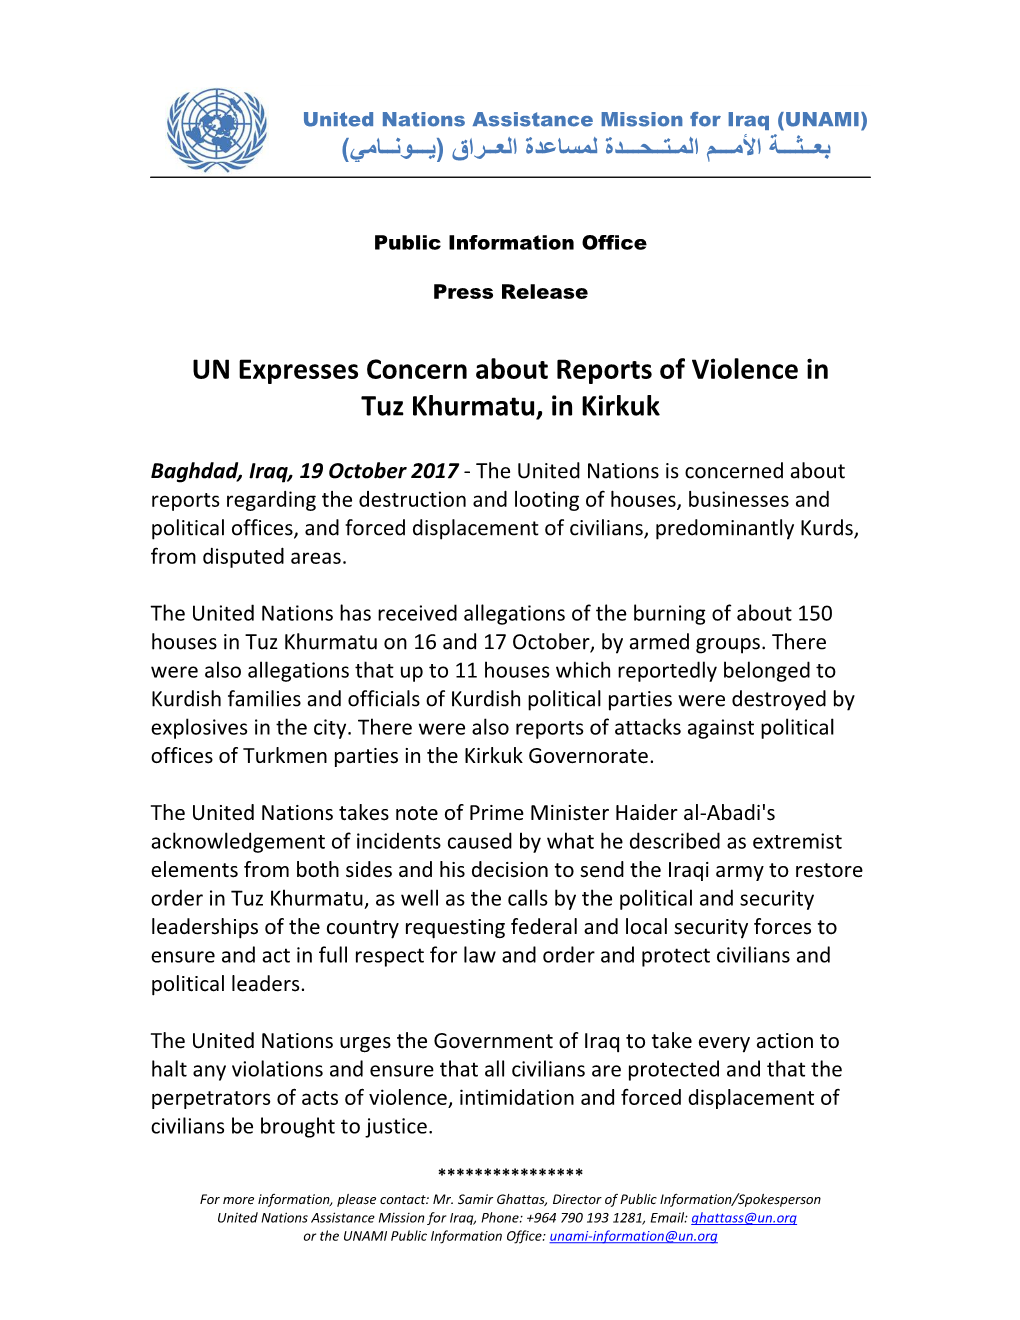 UN Expresses Concern About Reports of Violence in Tuz Khurmatu, in Kirkuk